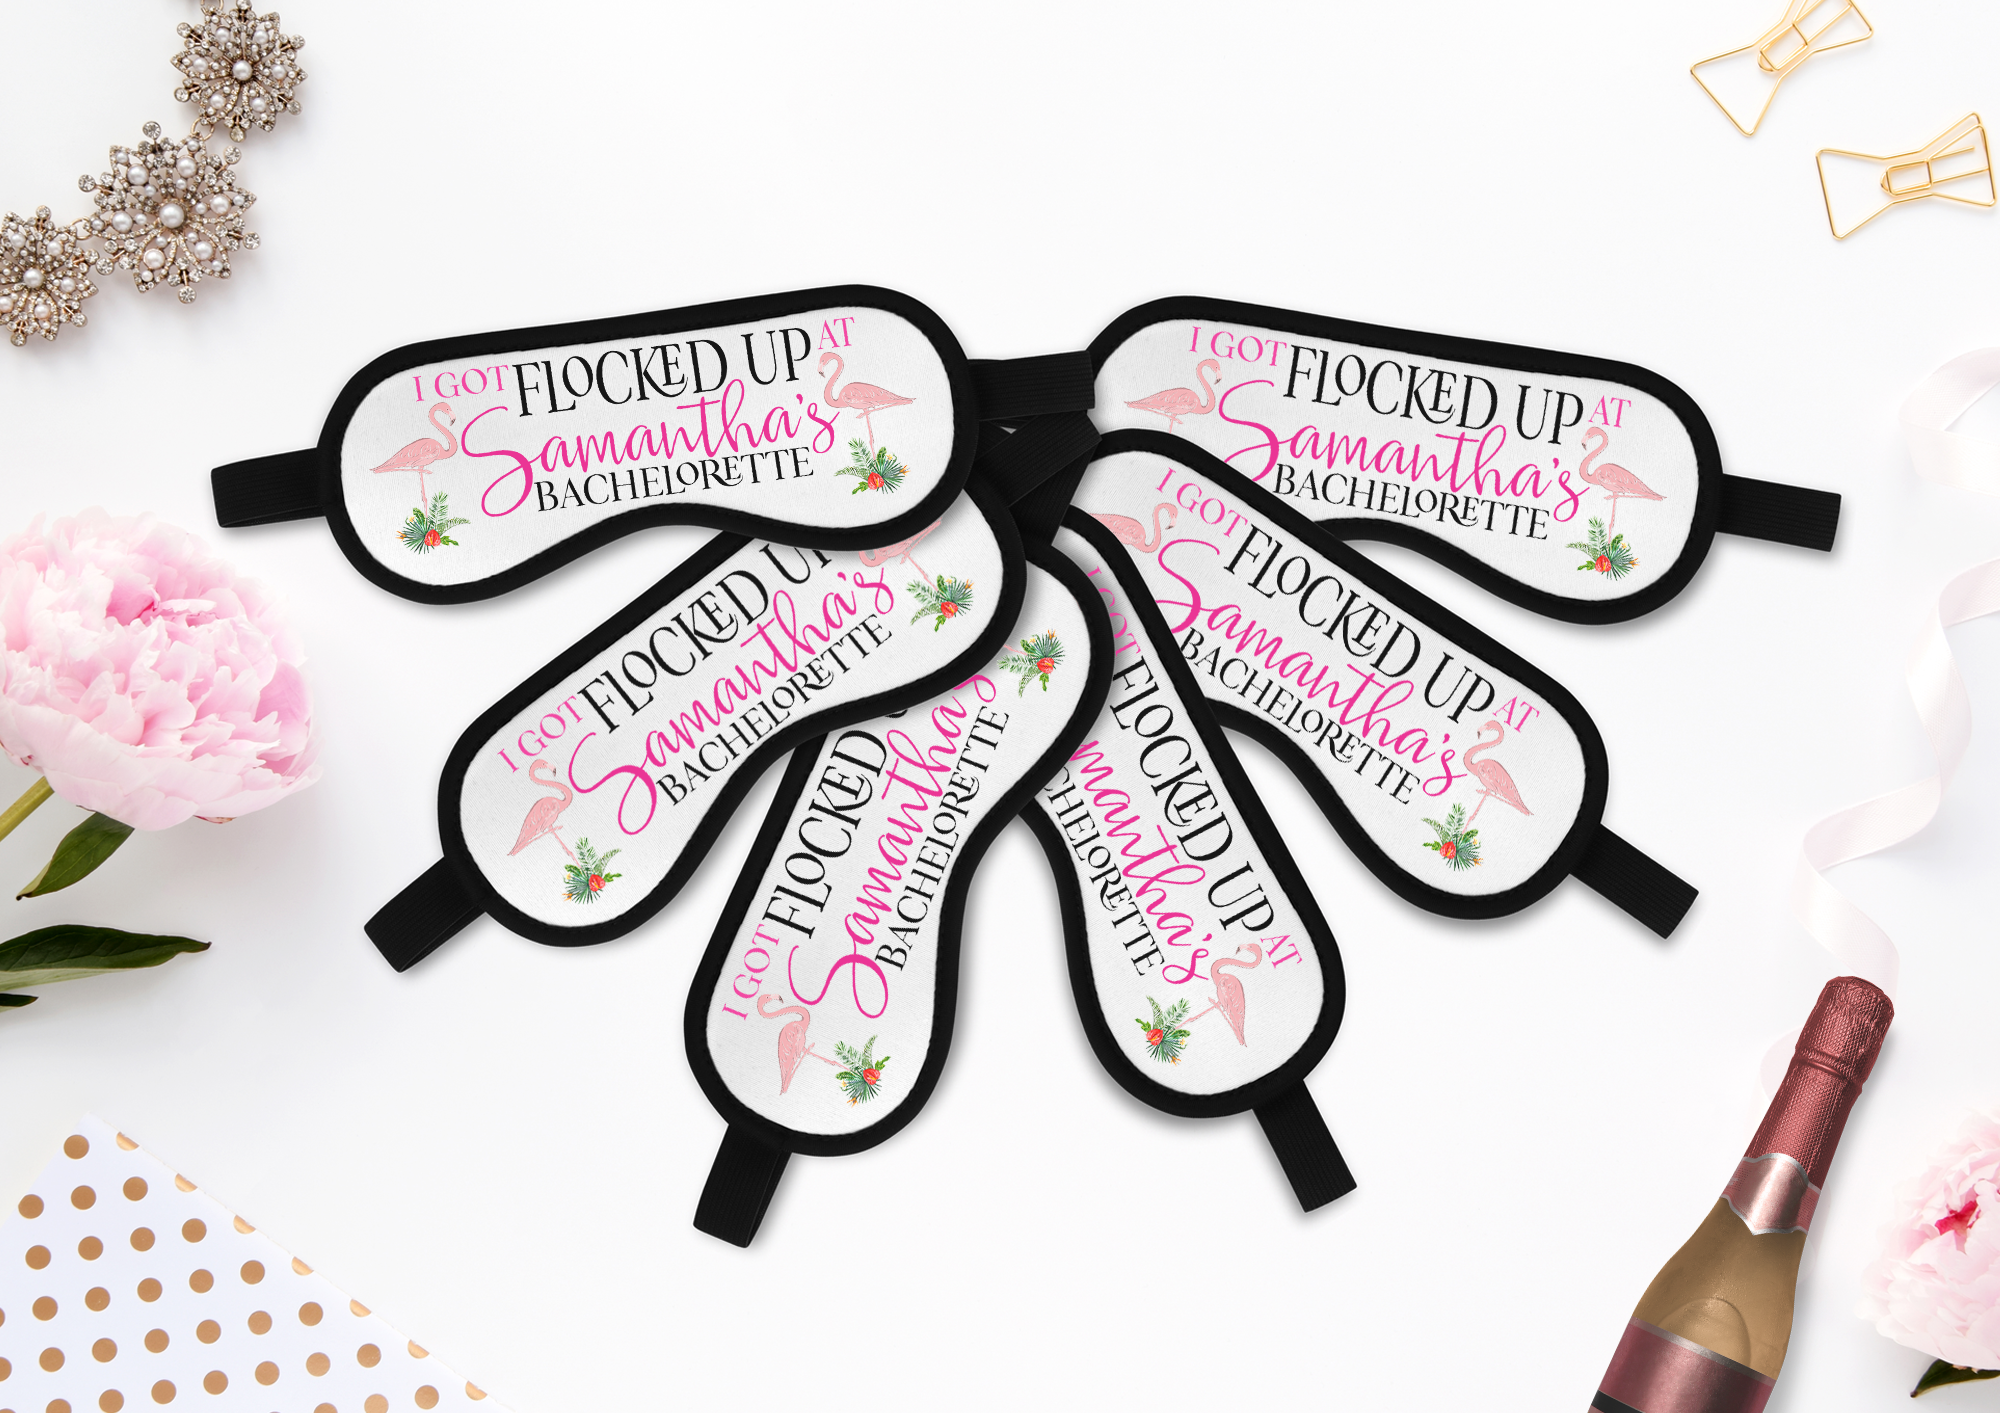 Bachelorette Party Sleep Mask Favors | Flamingo Bachelorette Party | I Got Flocked Up